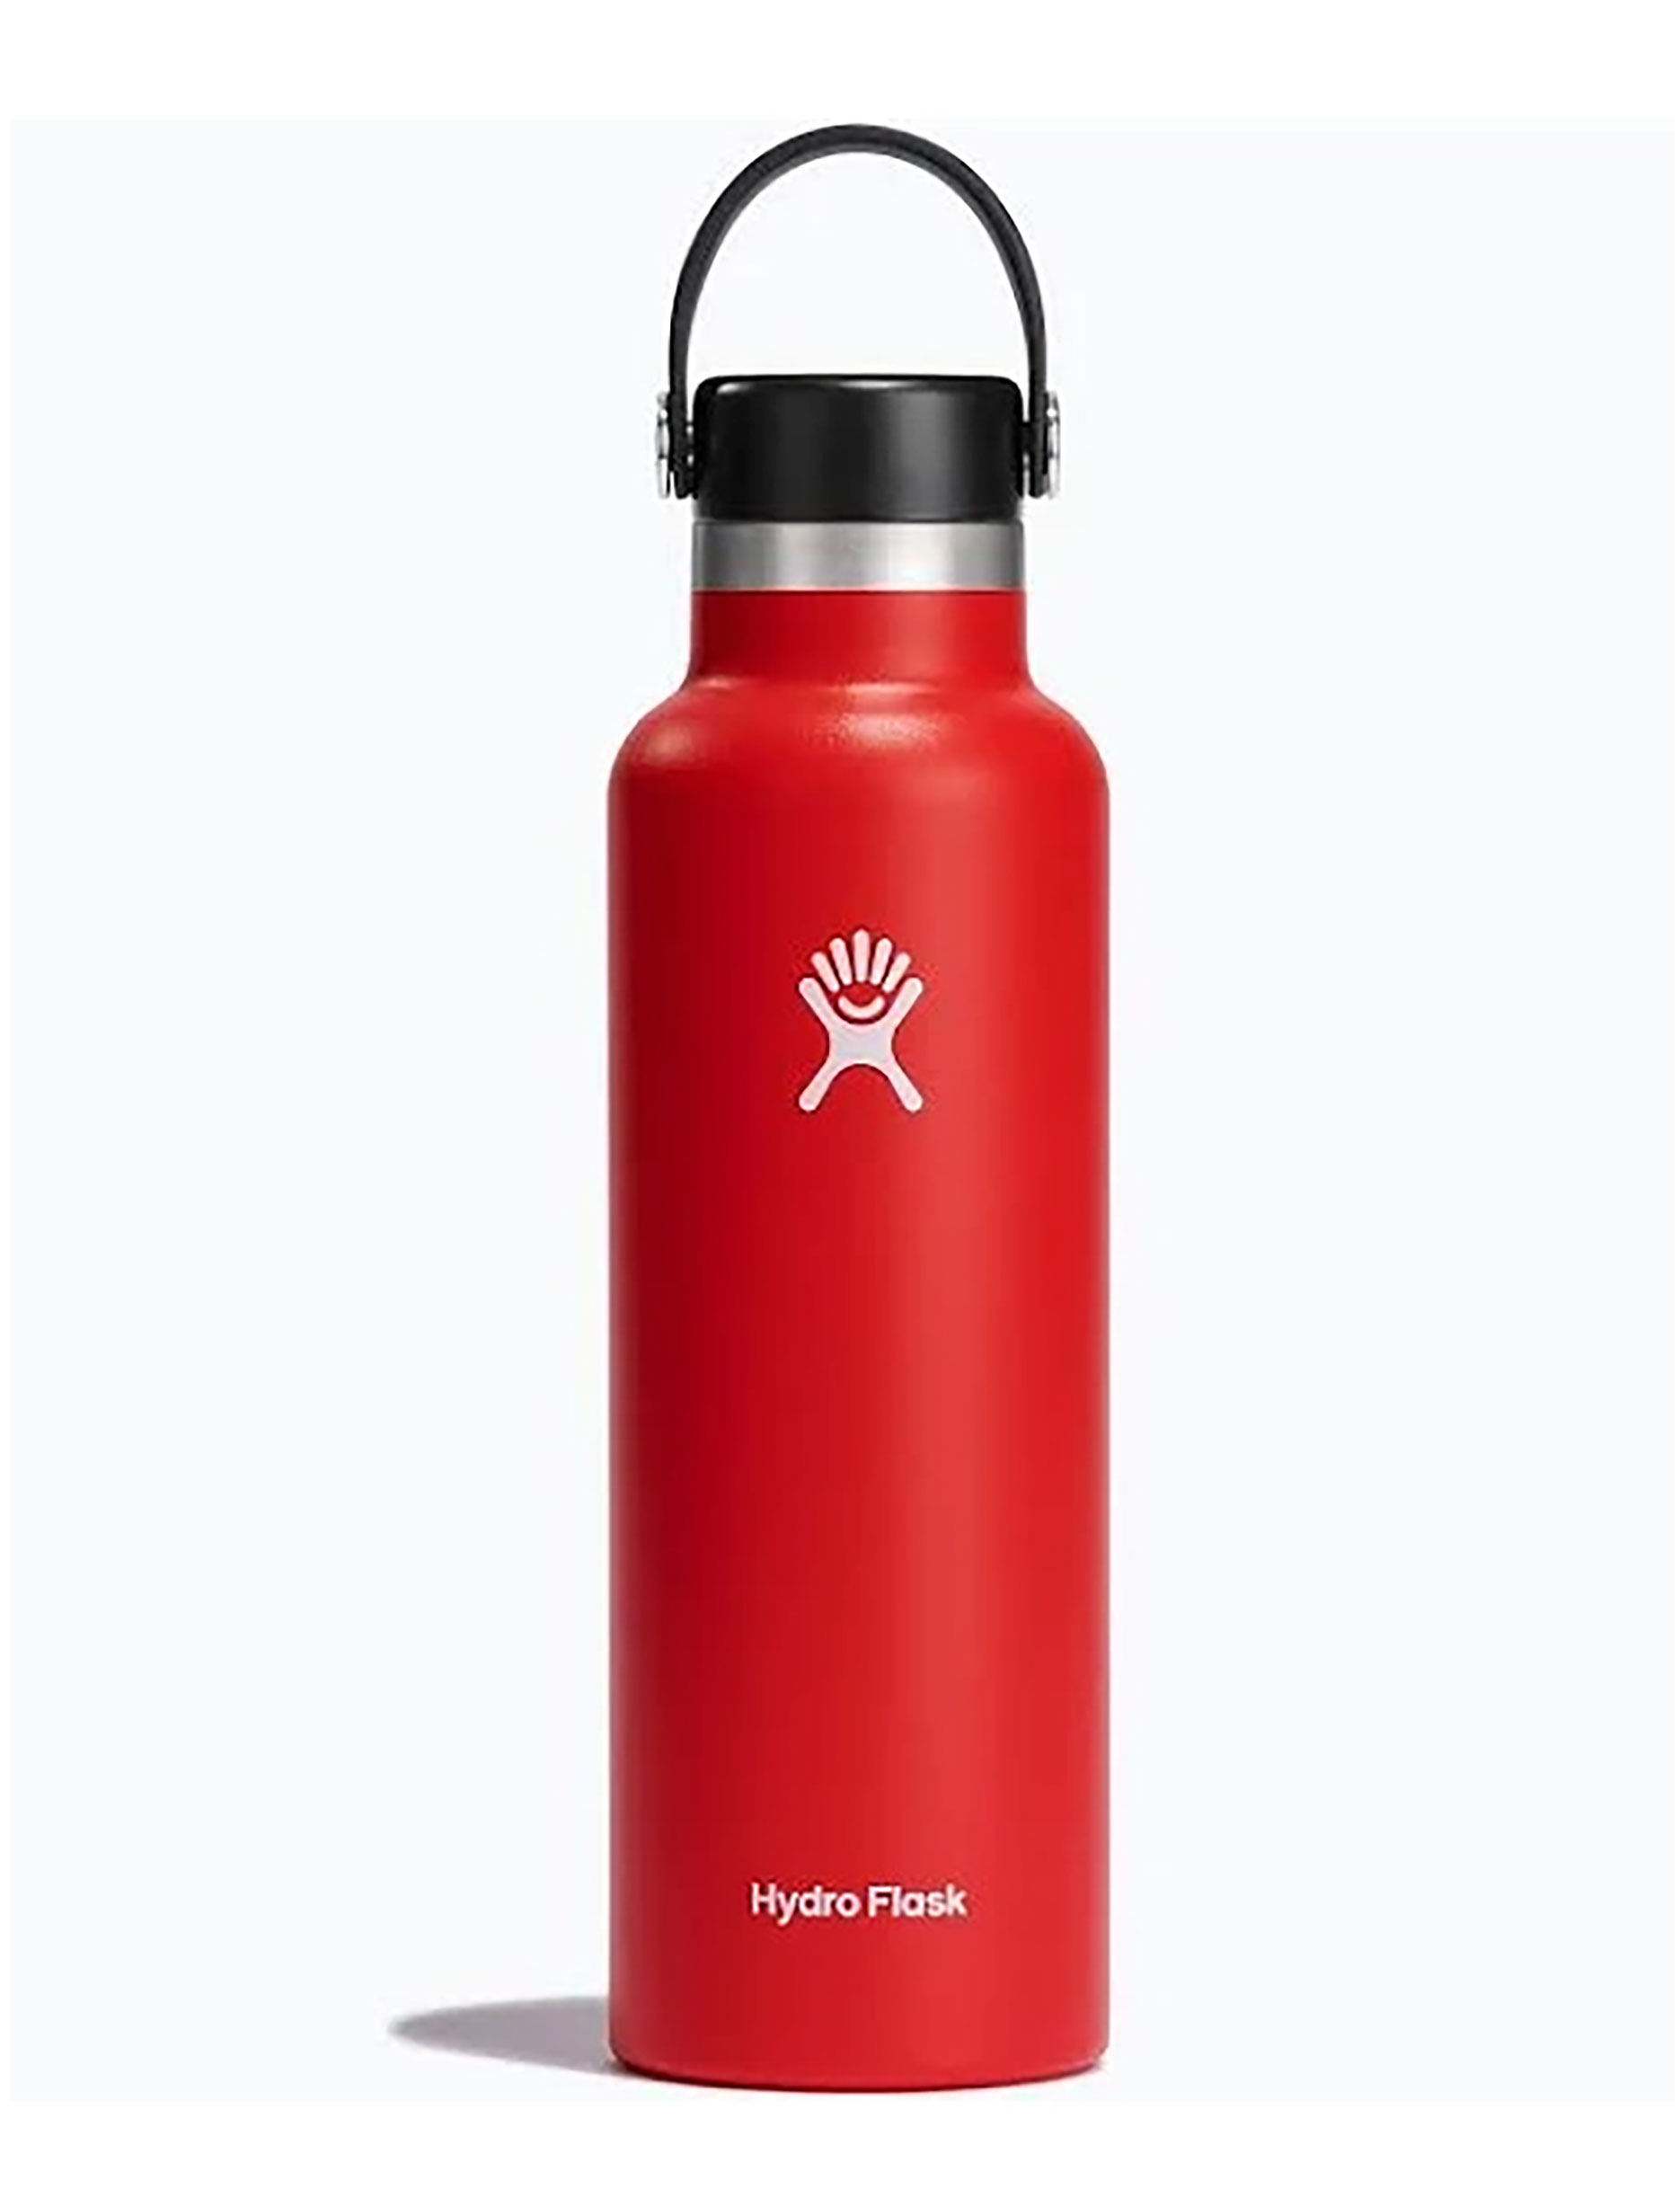 Drinkfles Hydro Flask met Flex Straw Cap 710ml rood